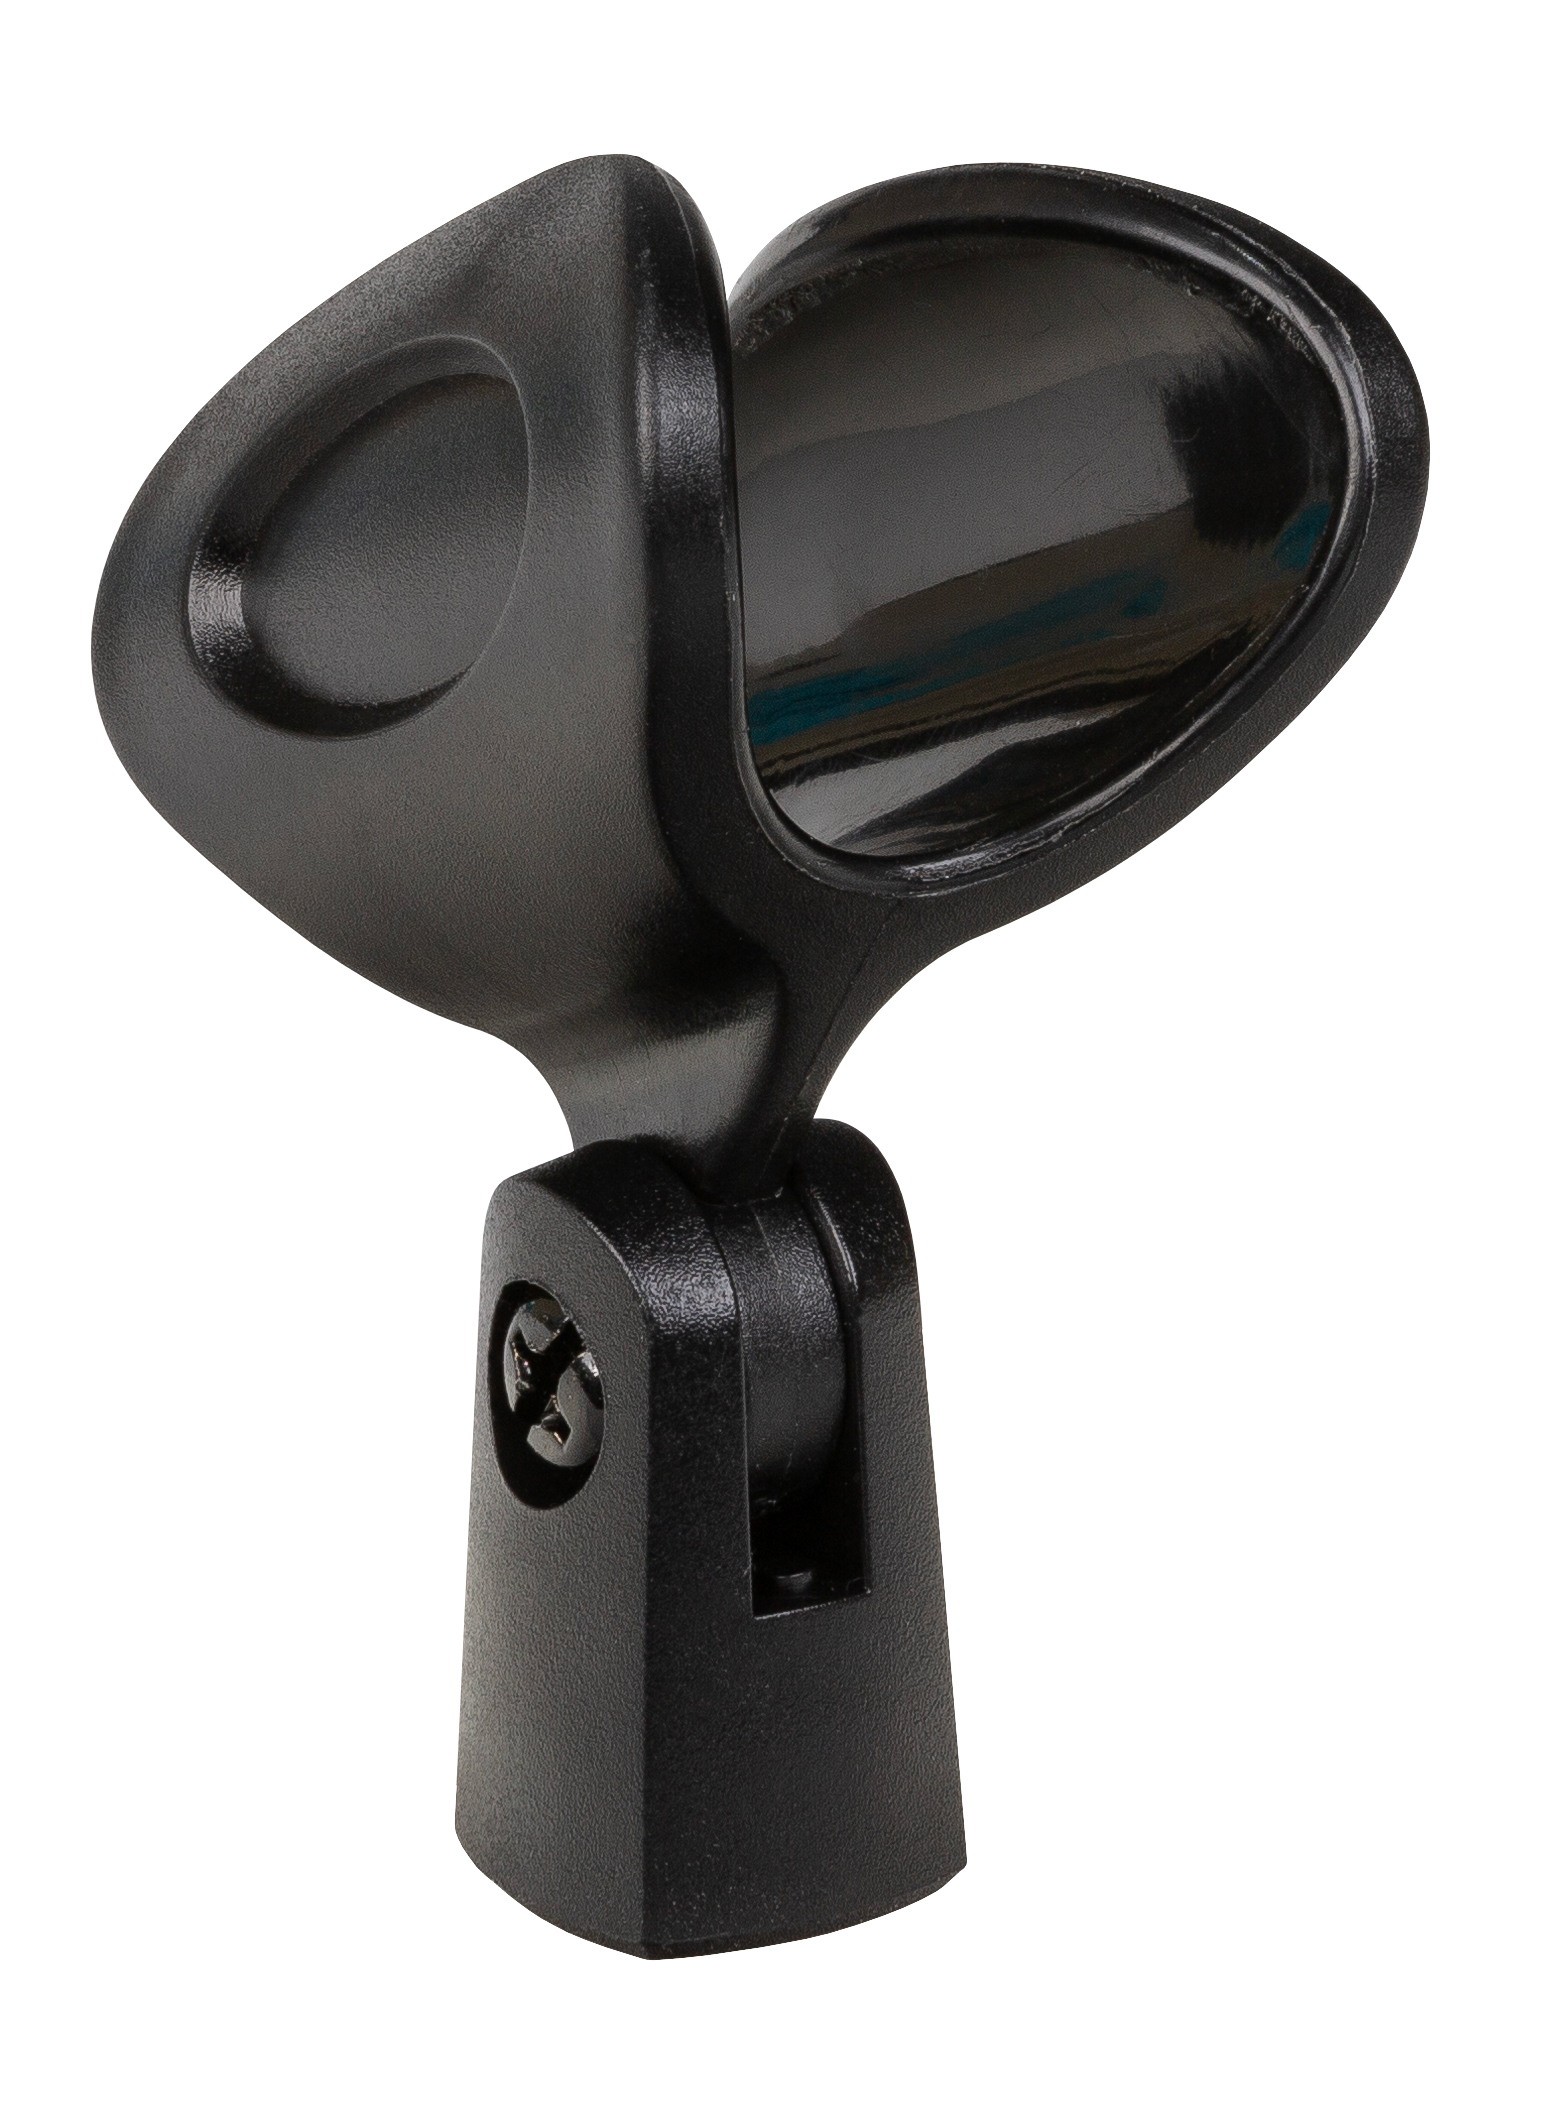 Unbreakable microphone holder for wireless handheld microphones